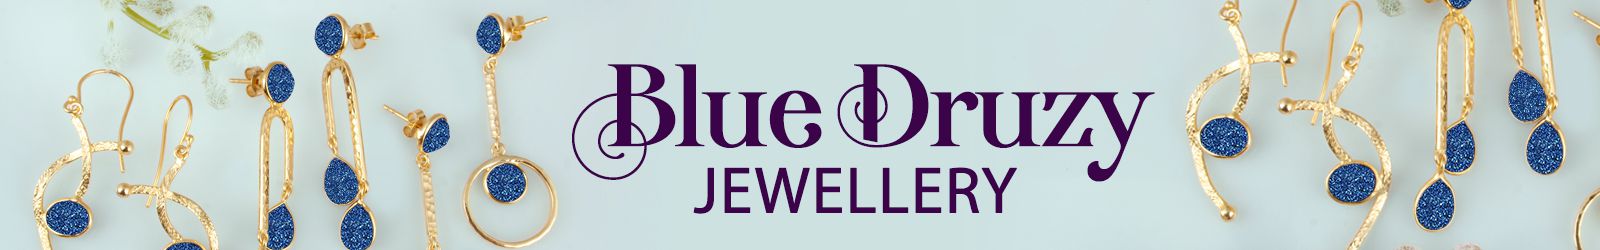 Silver Blue Druzy Jewelry Wholesale Supplier